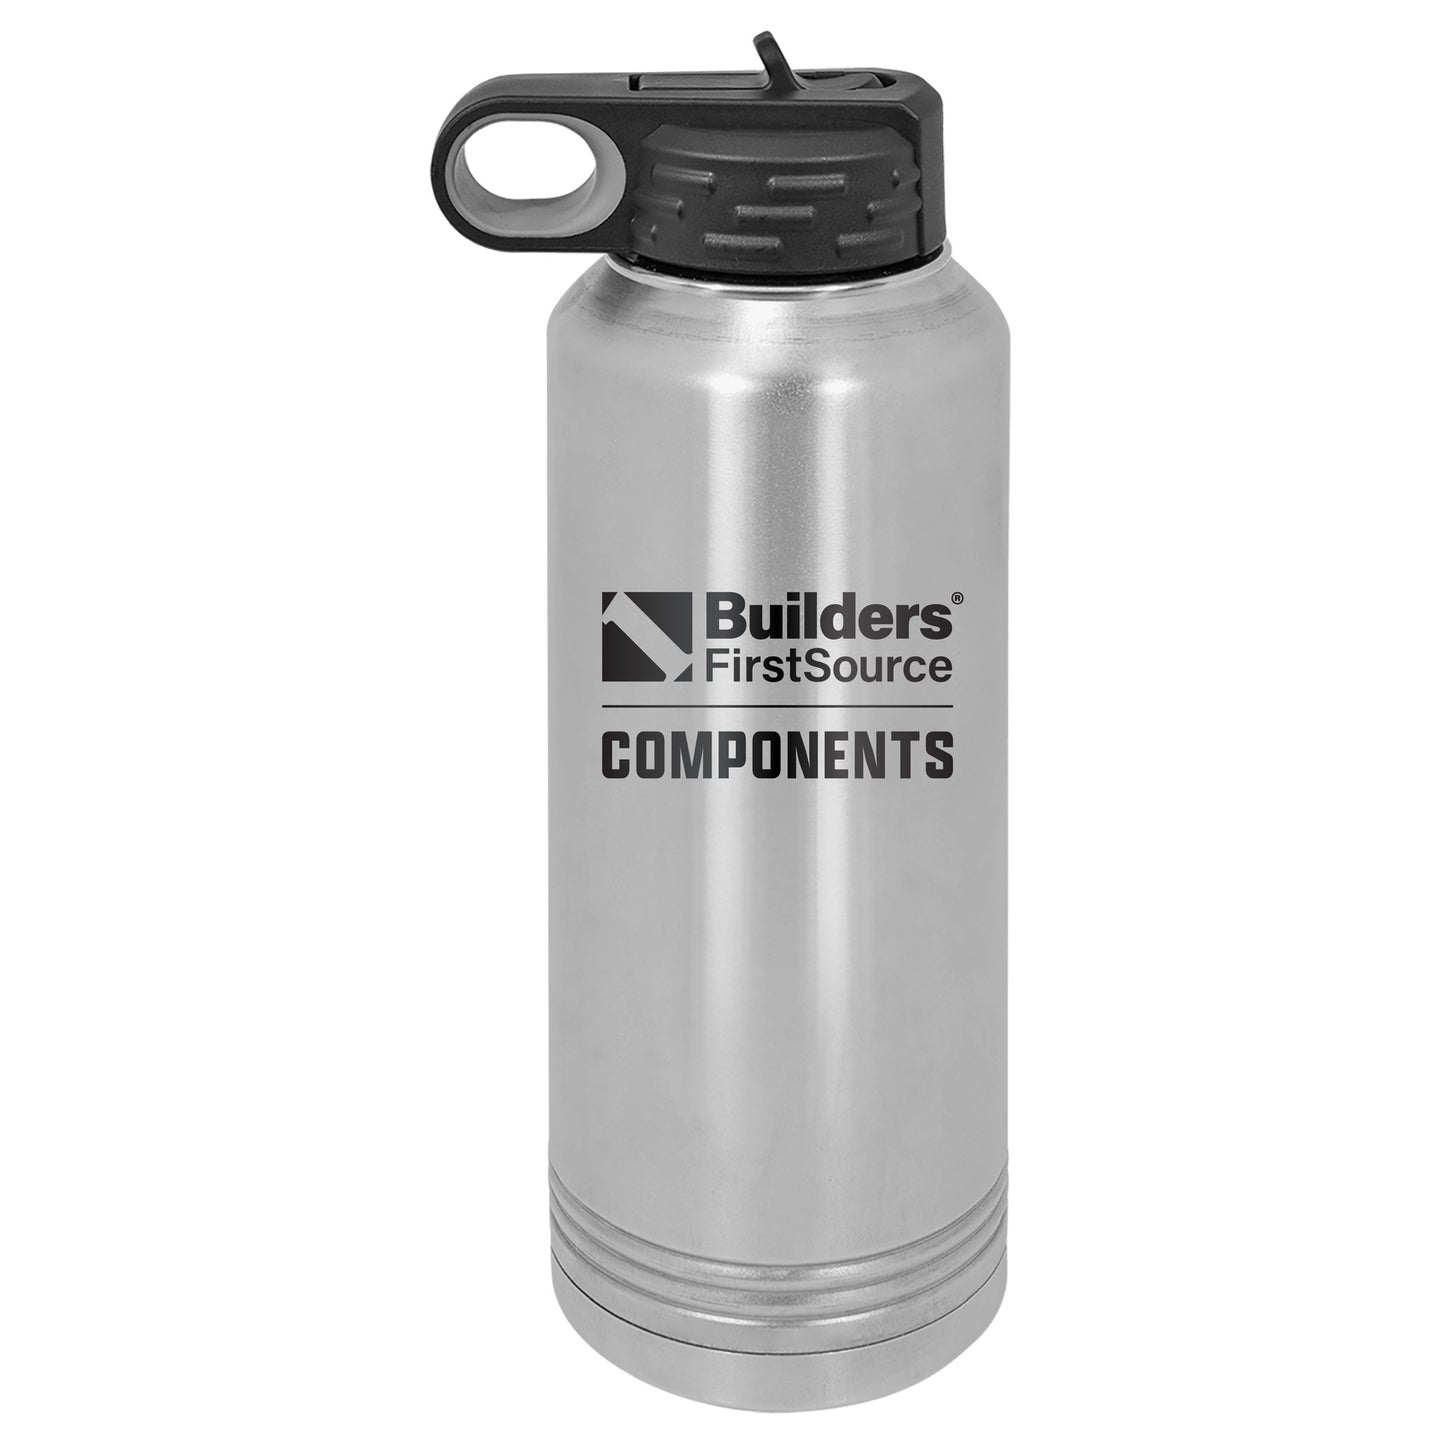 Components - Polar Camel 40 oz. Water Bottle